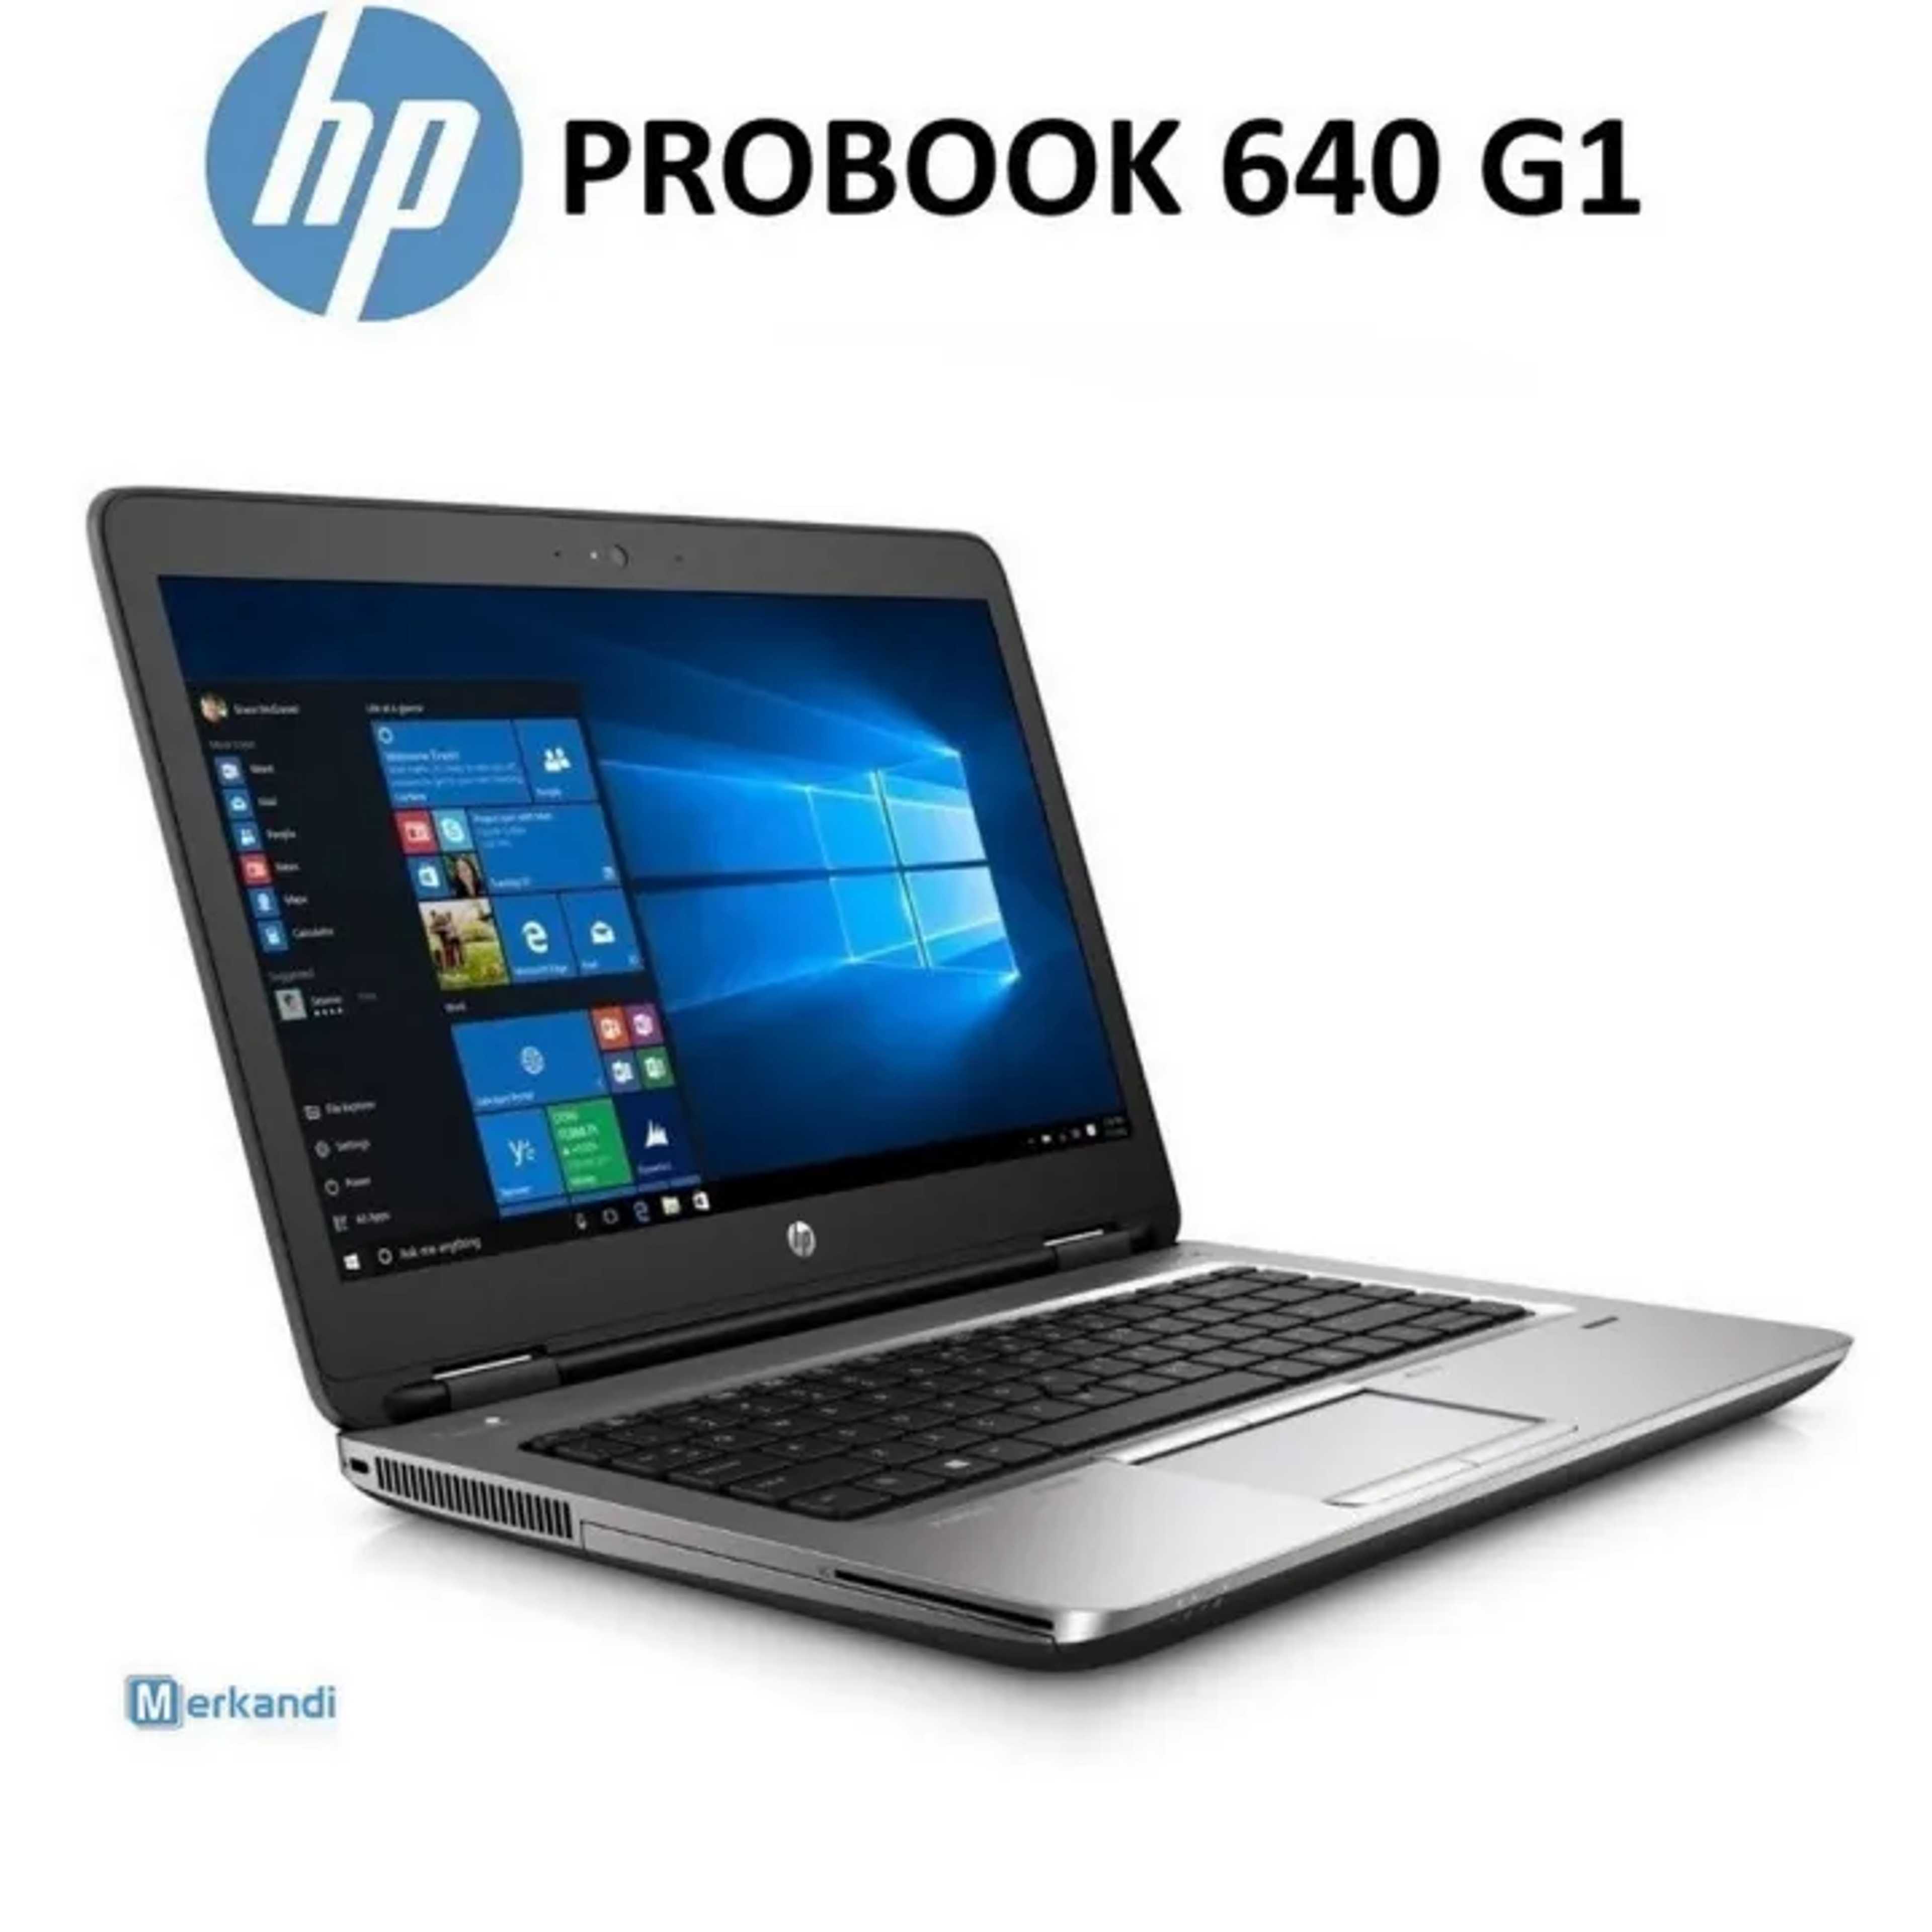 HP ProBook 640 G1 - Core i3 4th Generation - 4GB RAM - 500GB HDD - 14inch Screen - Window 10 Pro Active